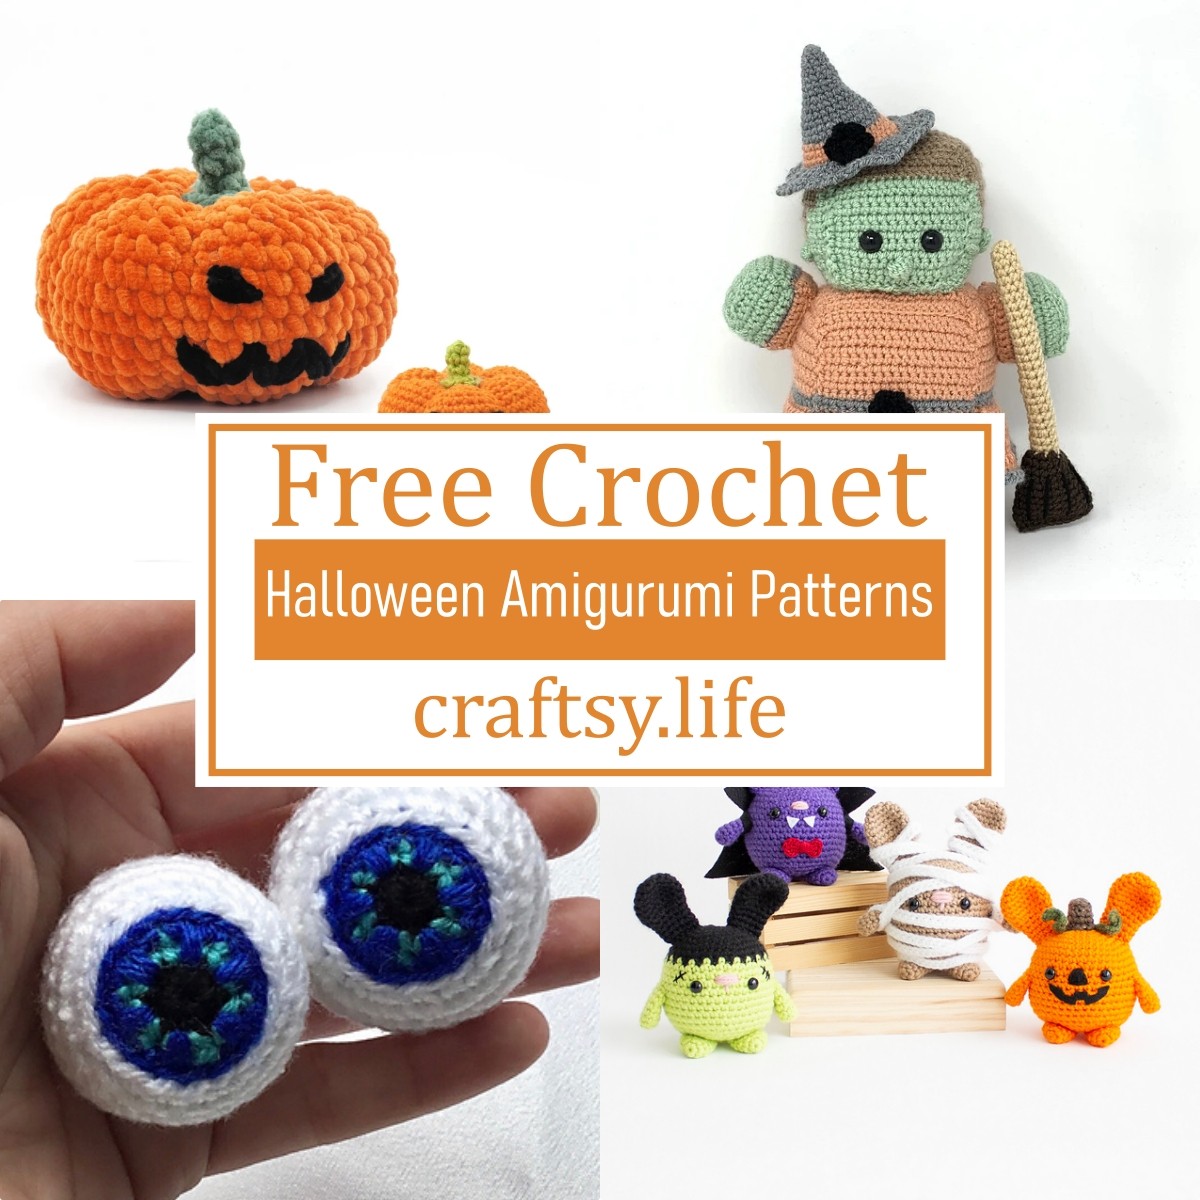 Free Crochet Halloween Amigurumi Patterns